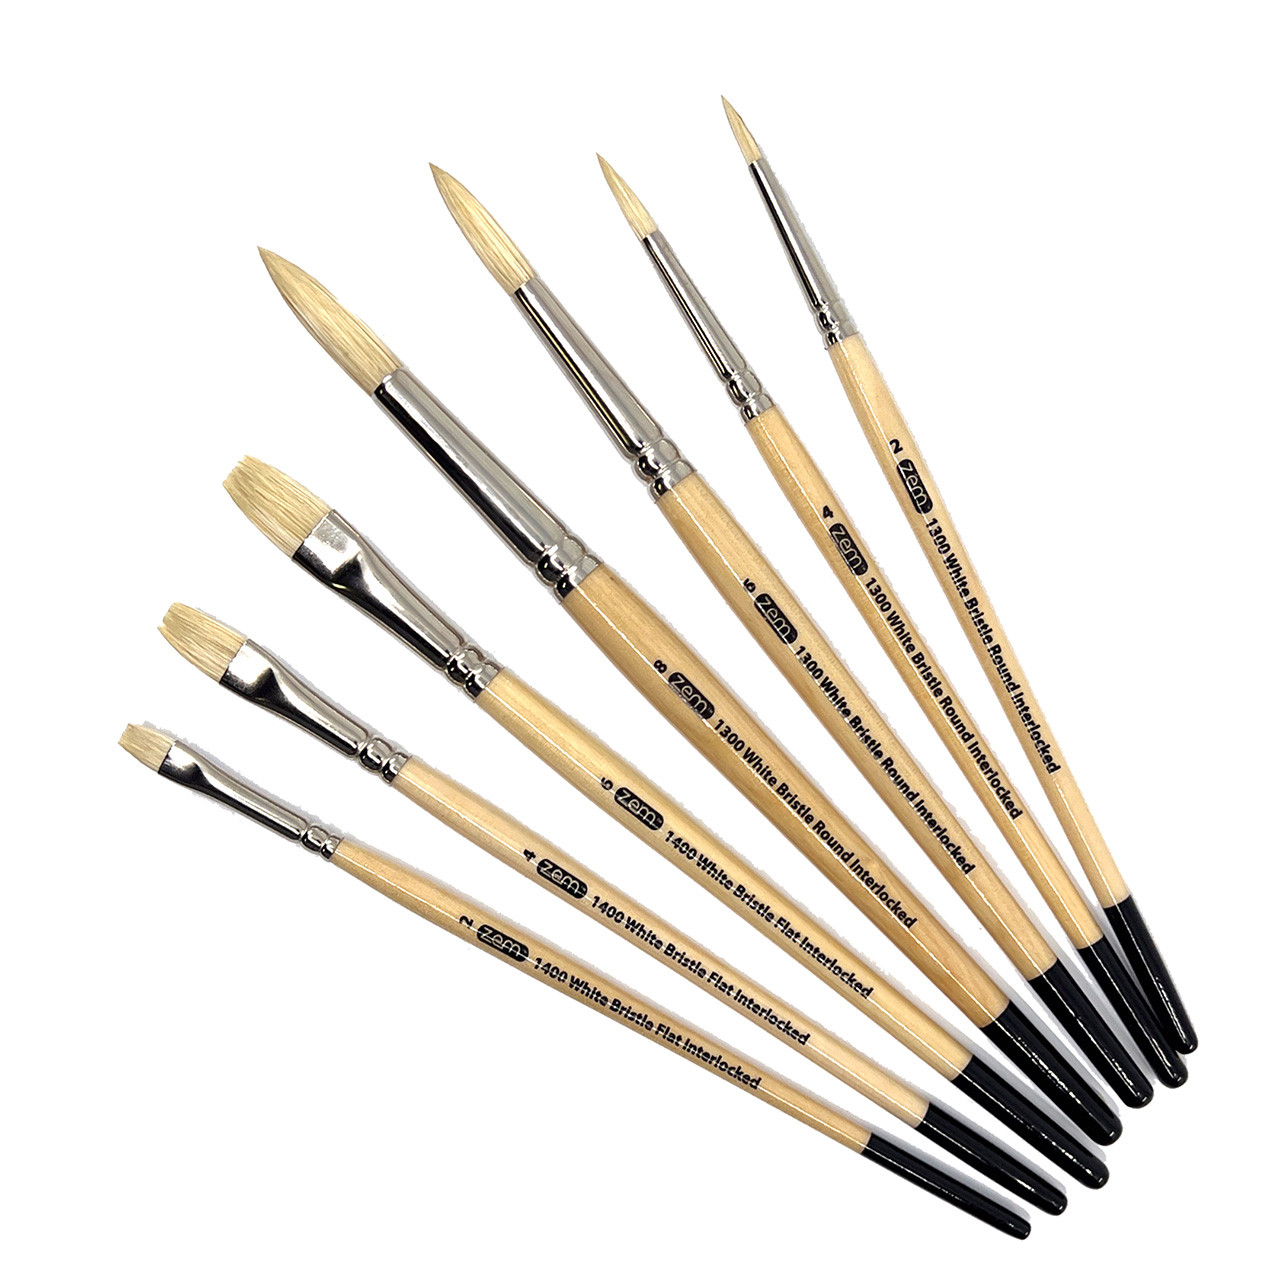 Round brush kit with brass bristles